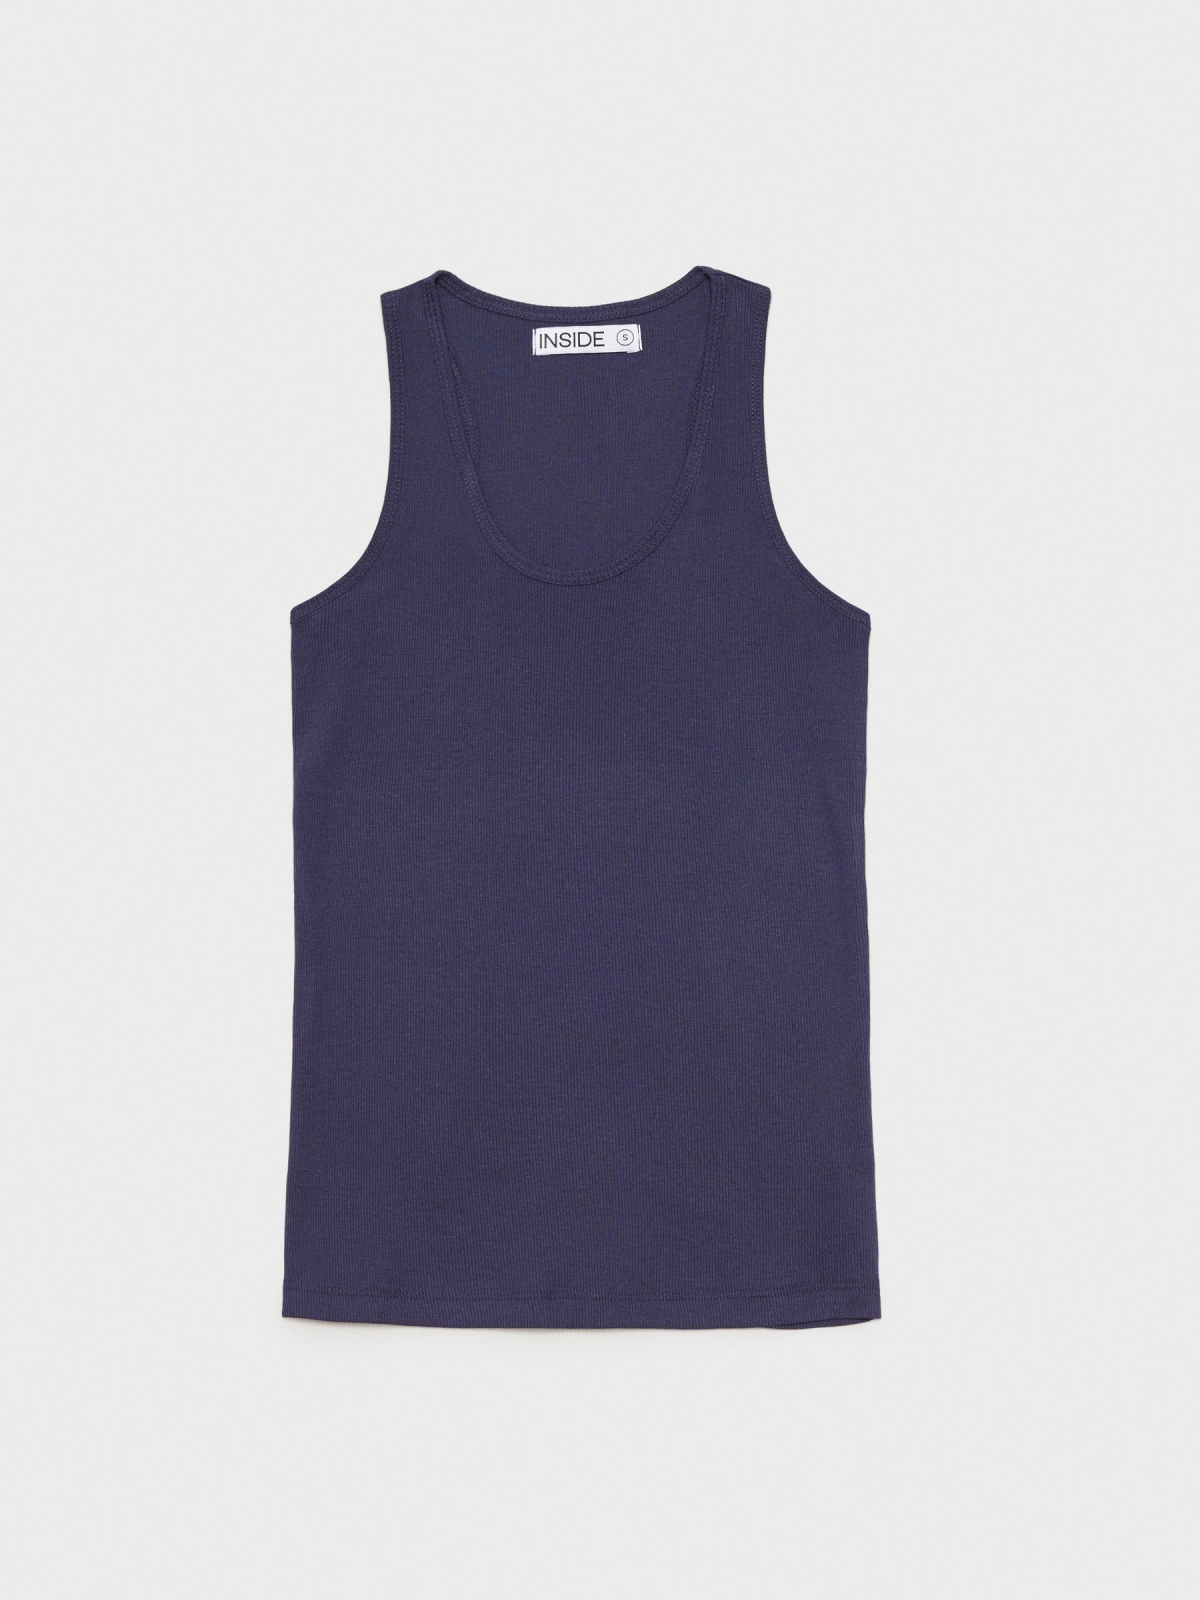  Camiseta básica espalda nadadora azul marino